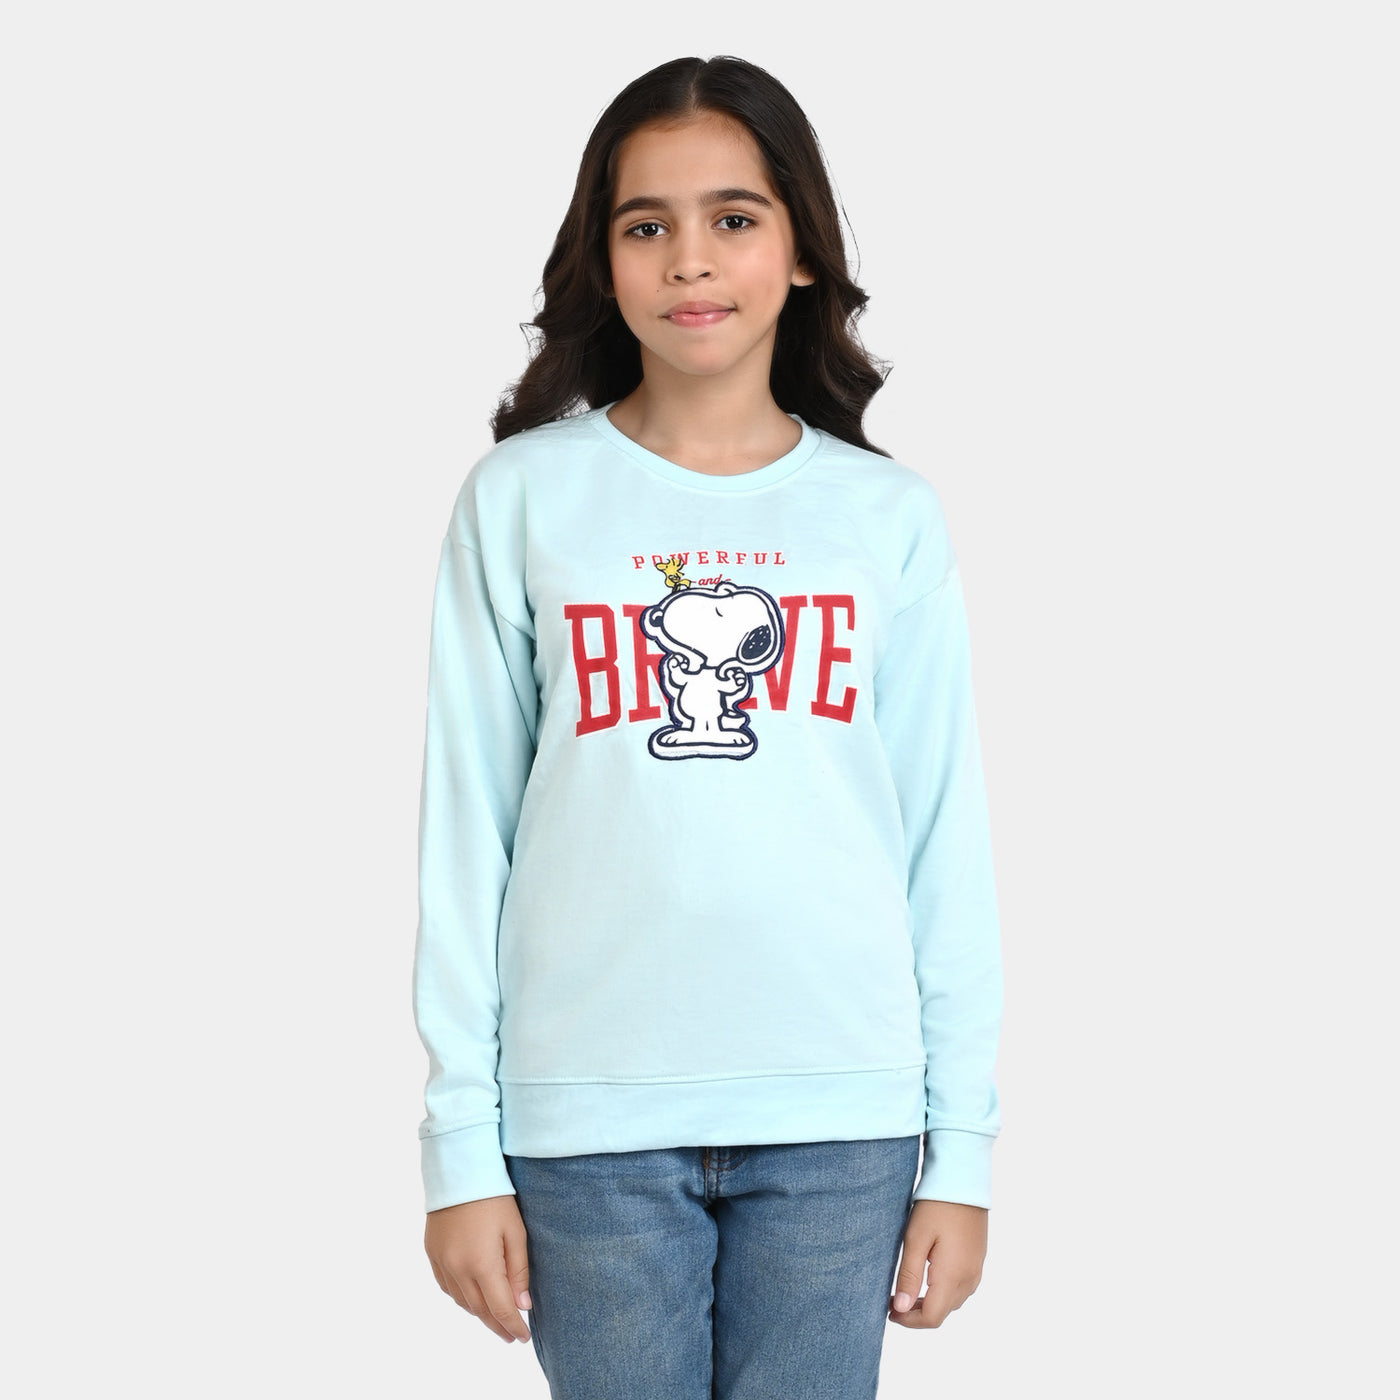 Girls Fleece Sweatshirt Brave-Light Blue